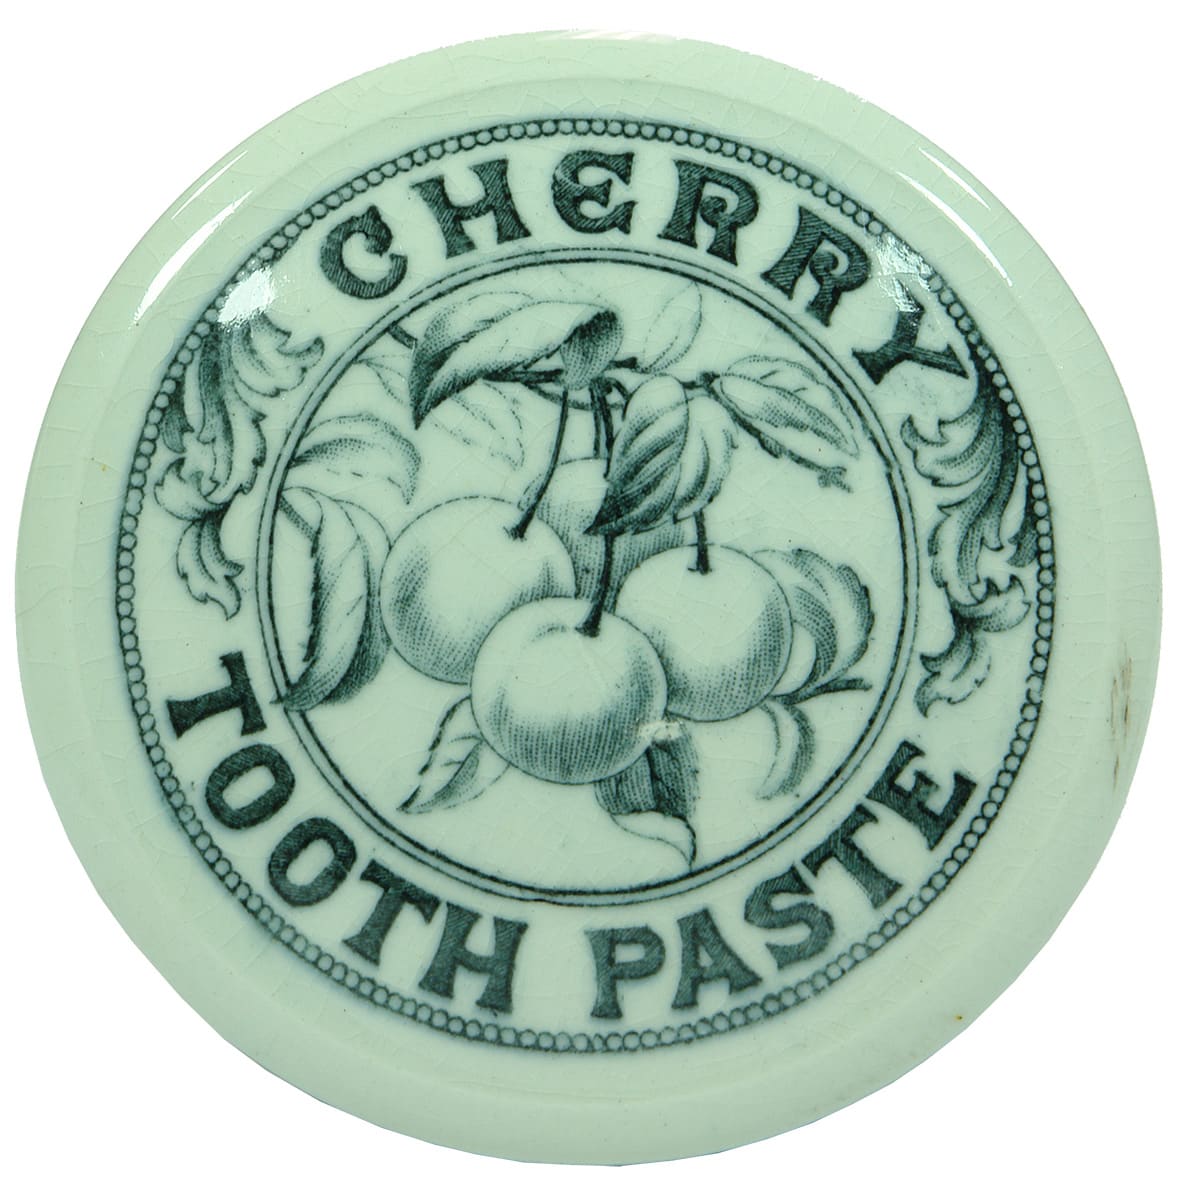 Cherry Tooth Paste Pot Lid